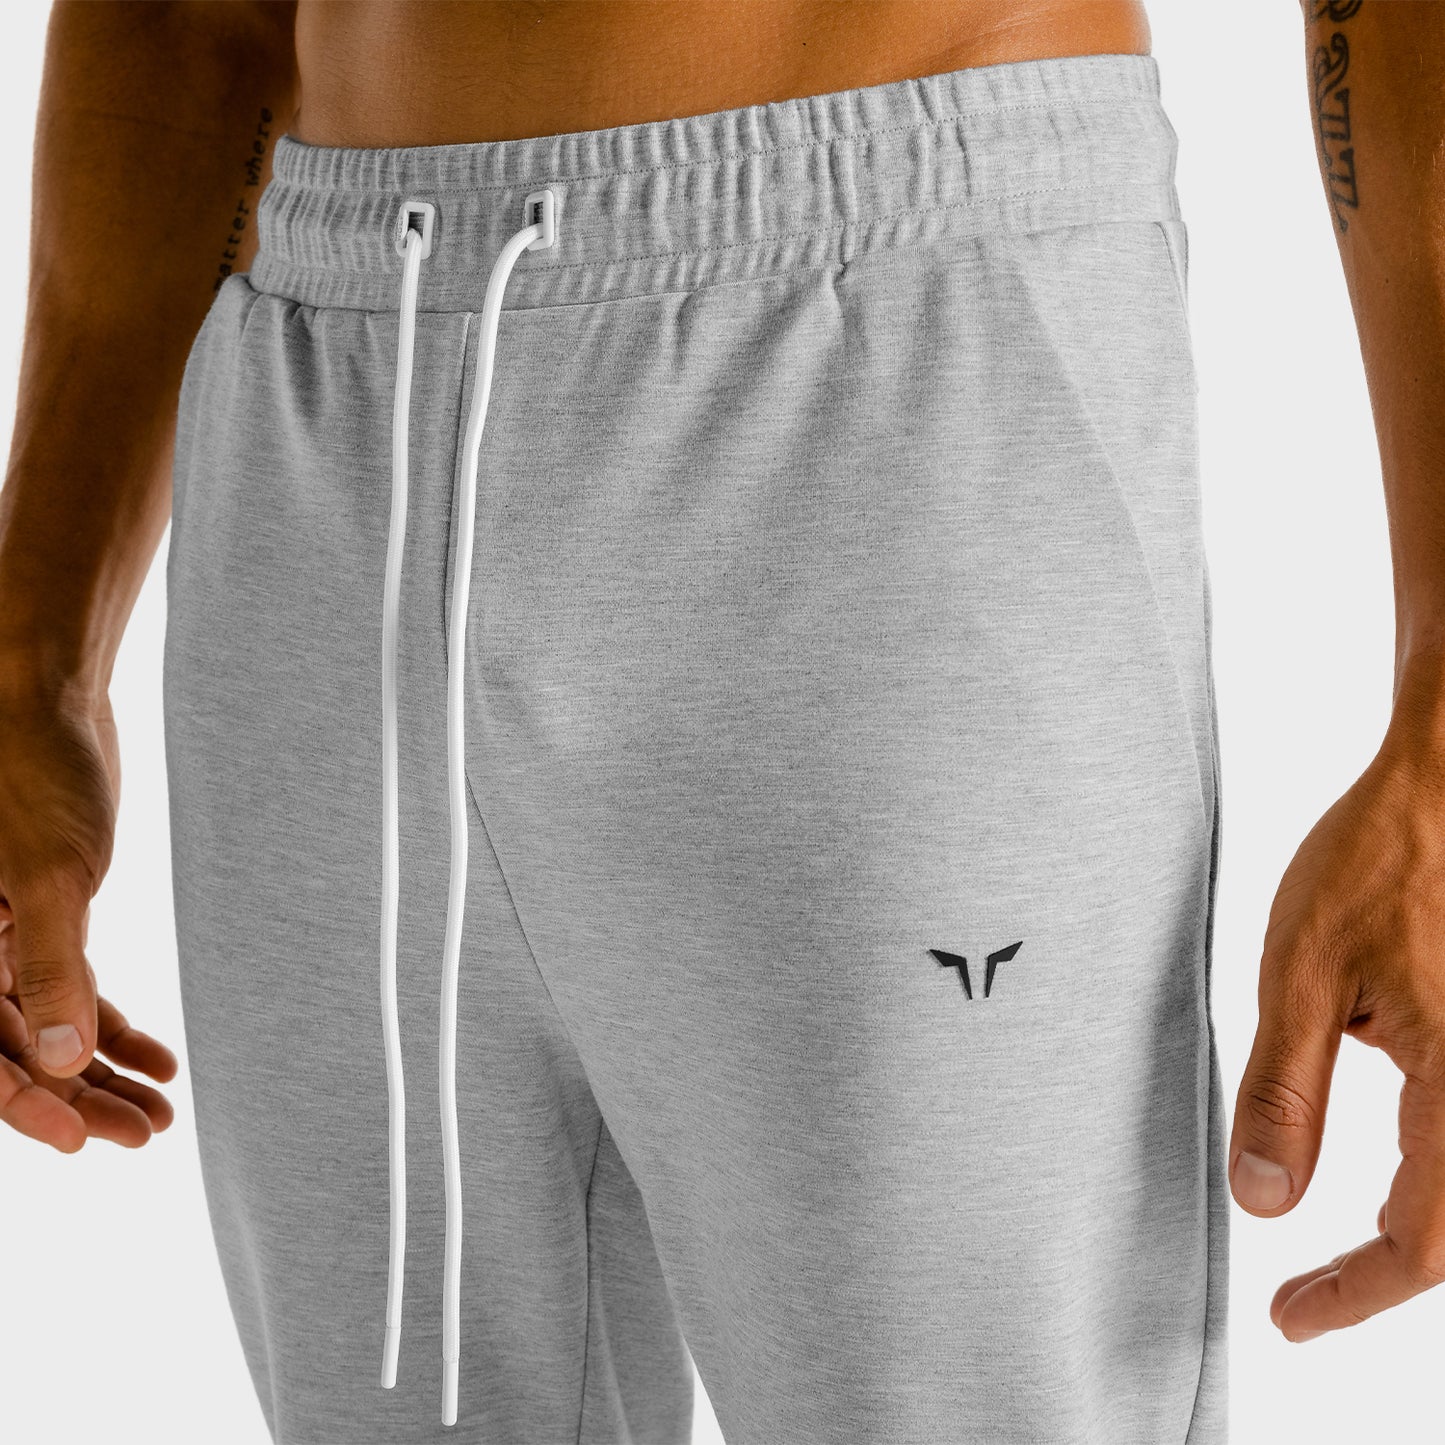 squatwolf-workout-pants-for-men-core-joggers-grey-gym-wear